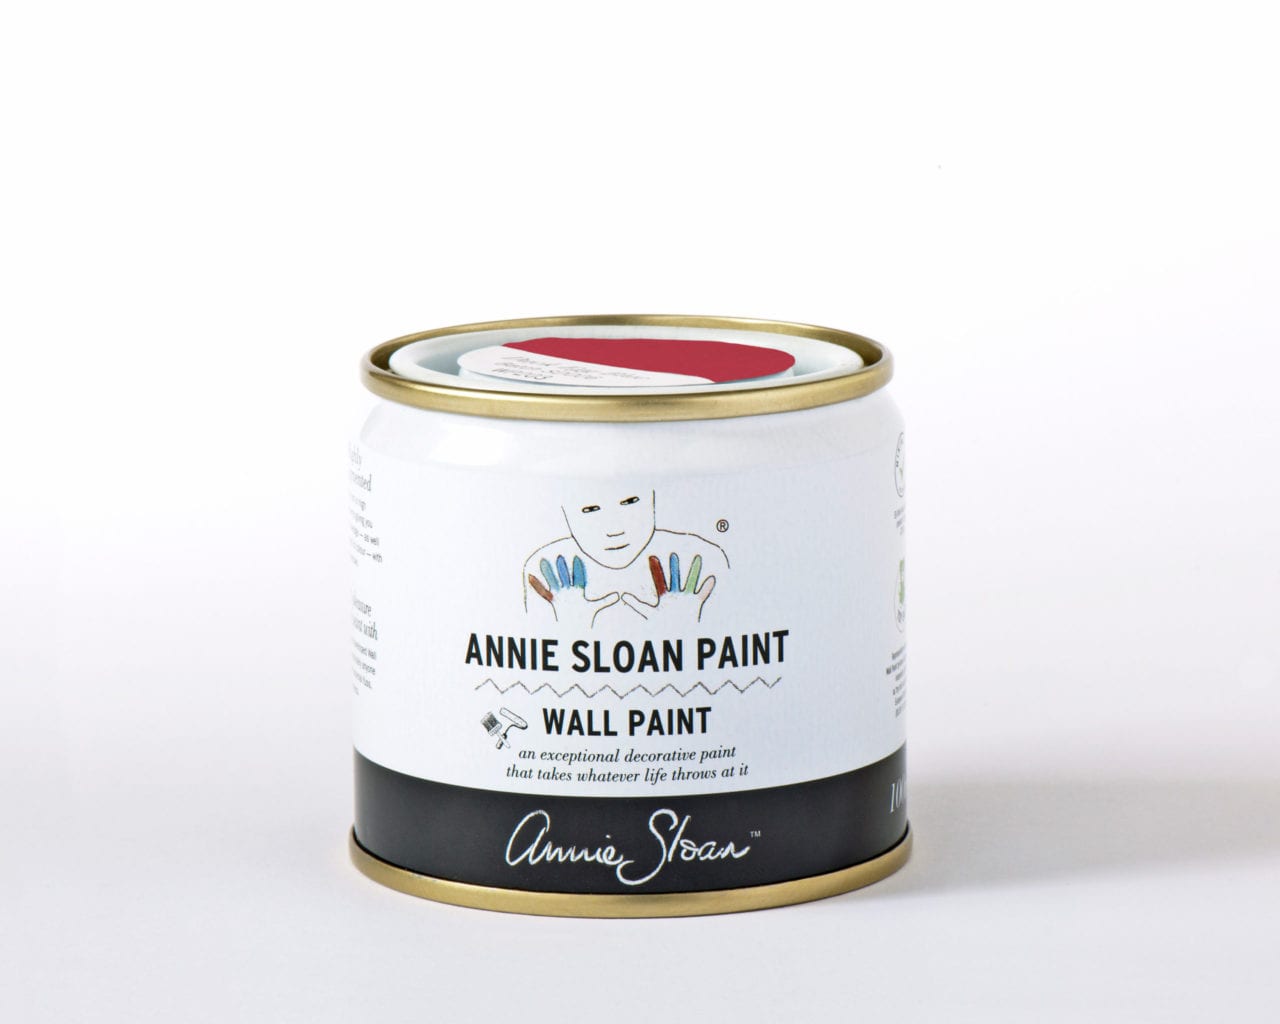 1641471647Emperors-Silk-Annie-Sloan-Wall-Paint-100-ml-tin-scaled-1.jpg